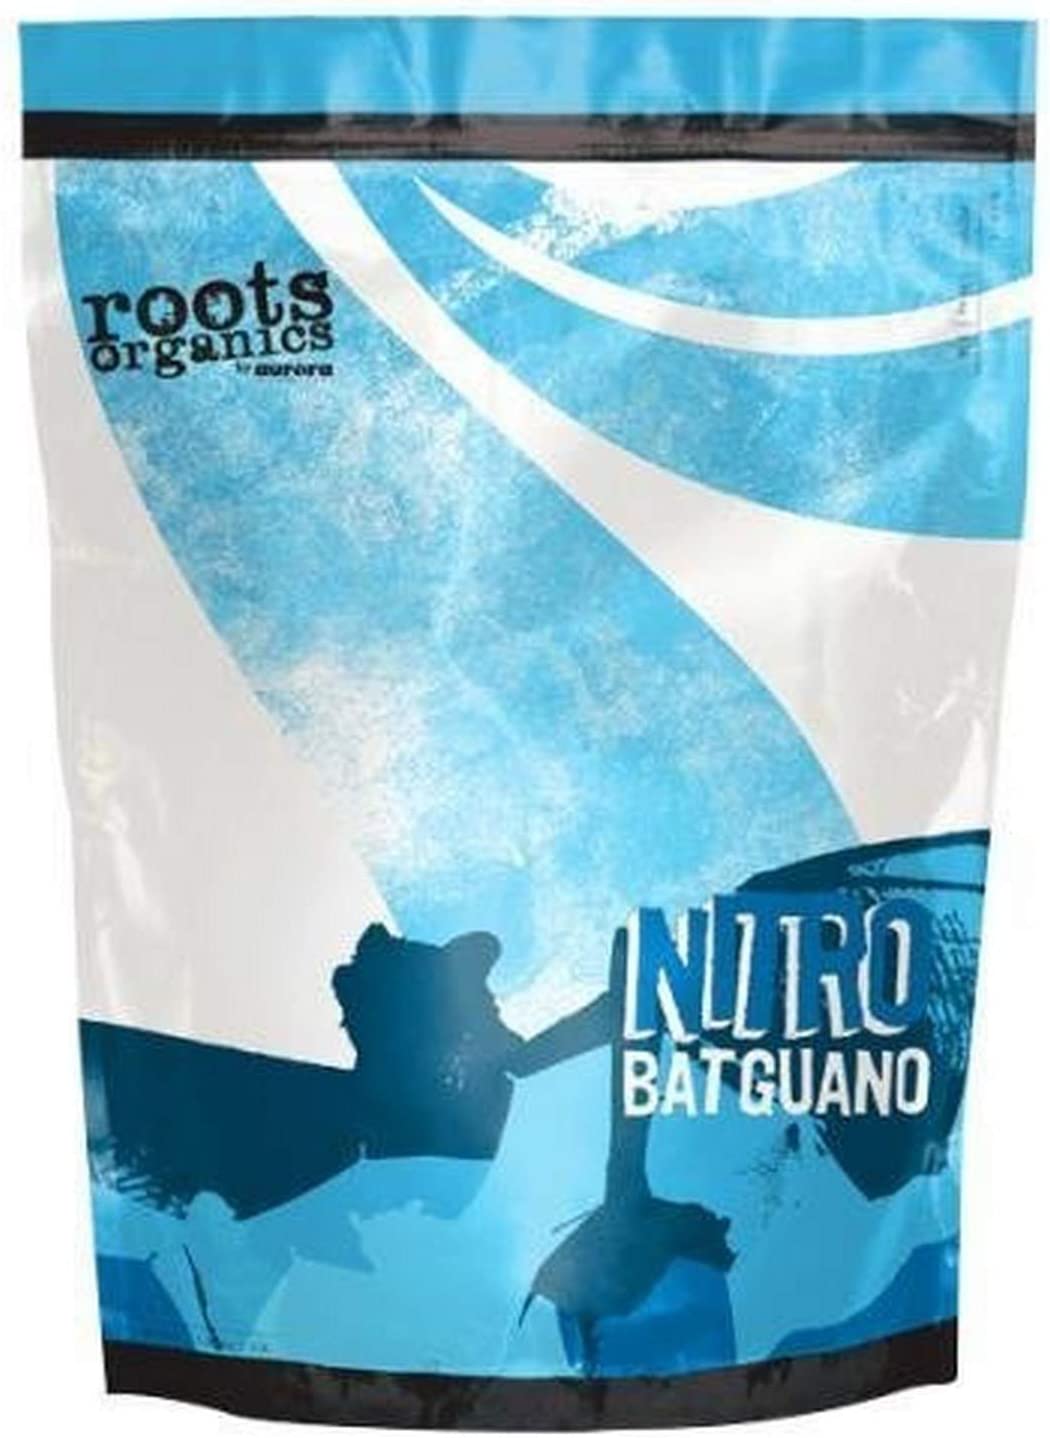 Roots Organics Nitro Bat Guano Fertilizer, 3-Pound